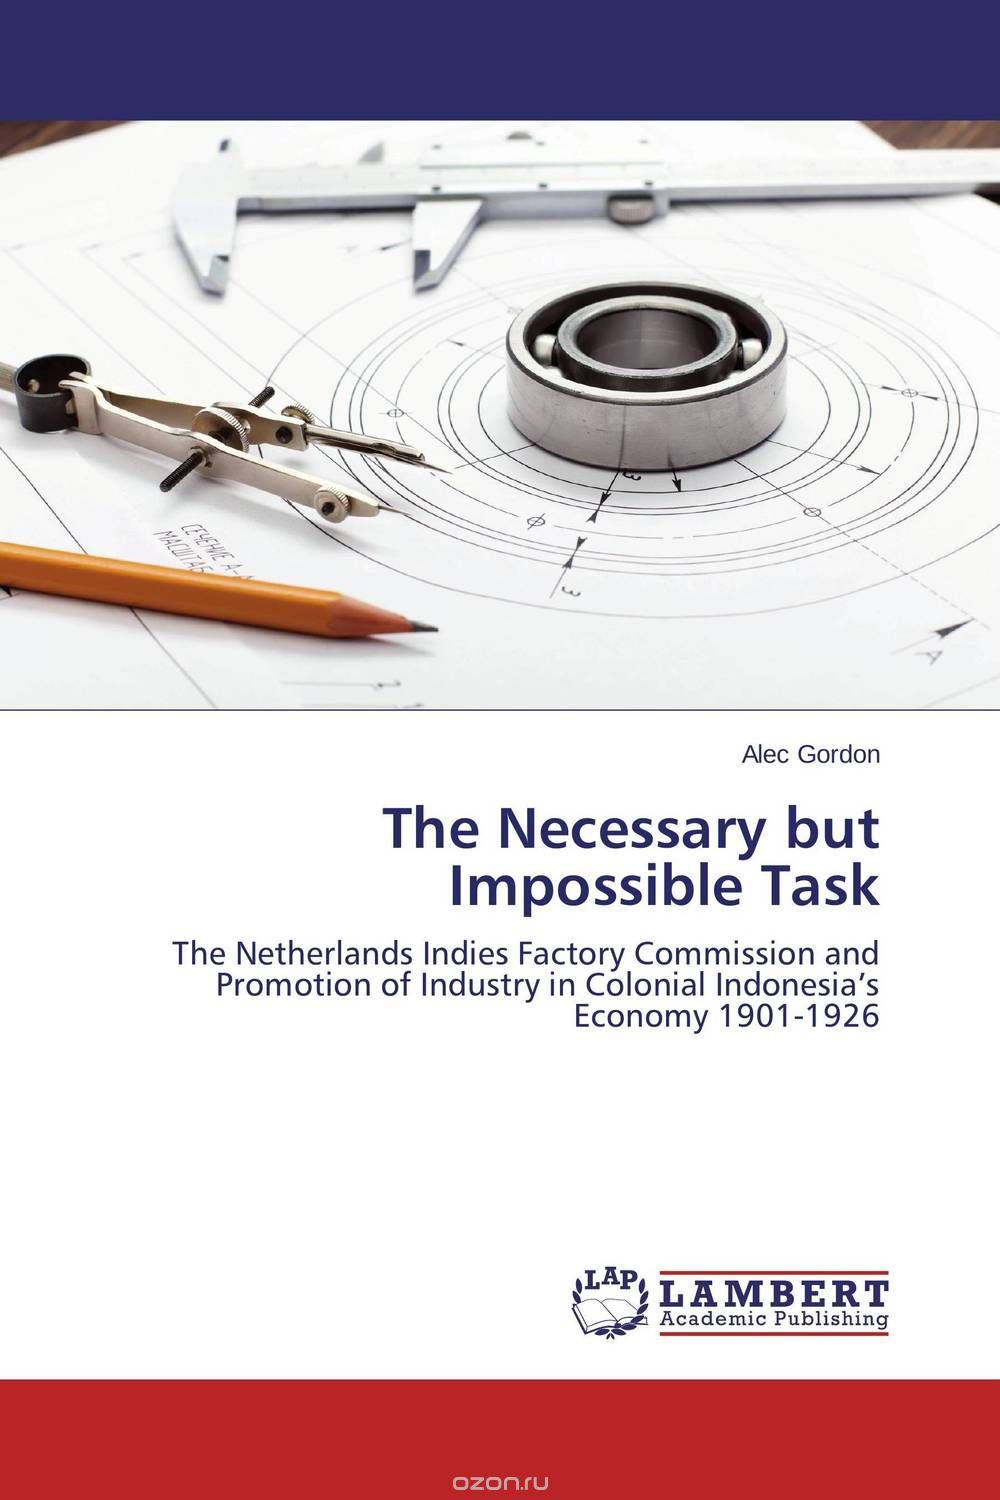 Скачать книгу "The Necessary but Impossible Task"